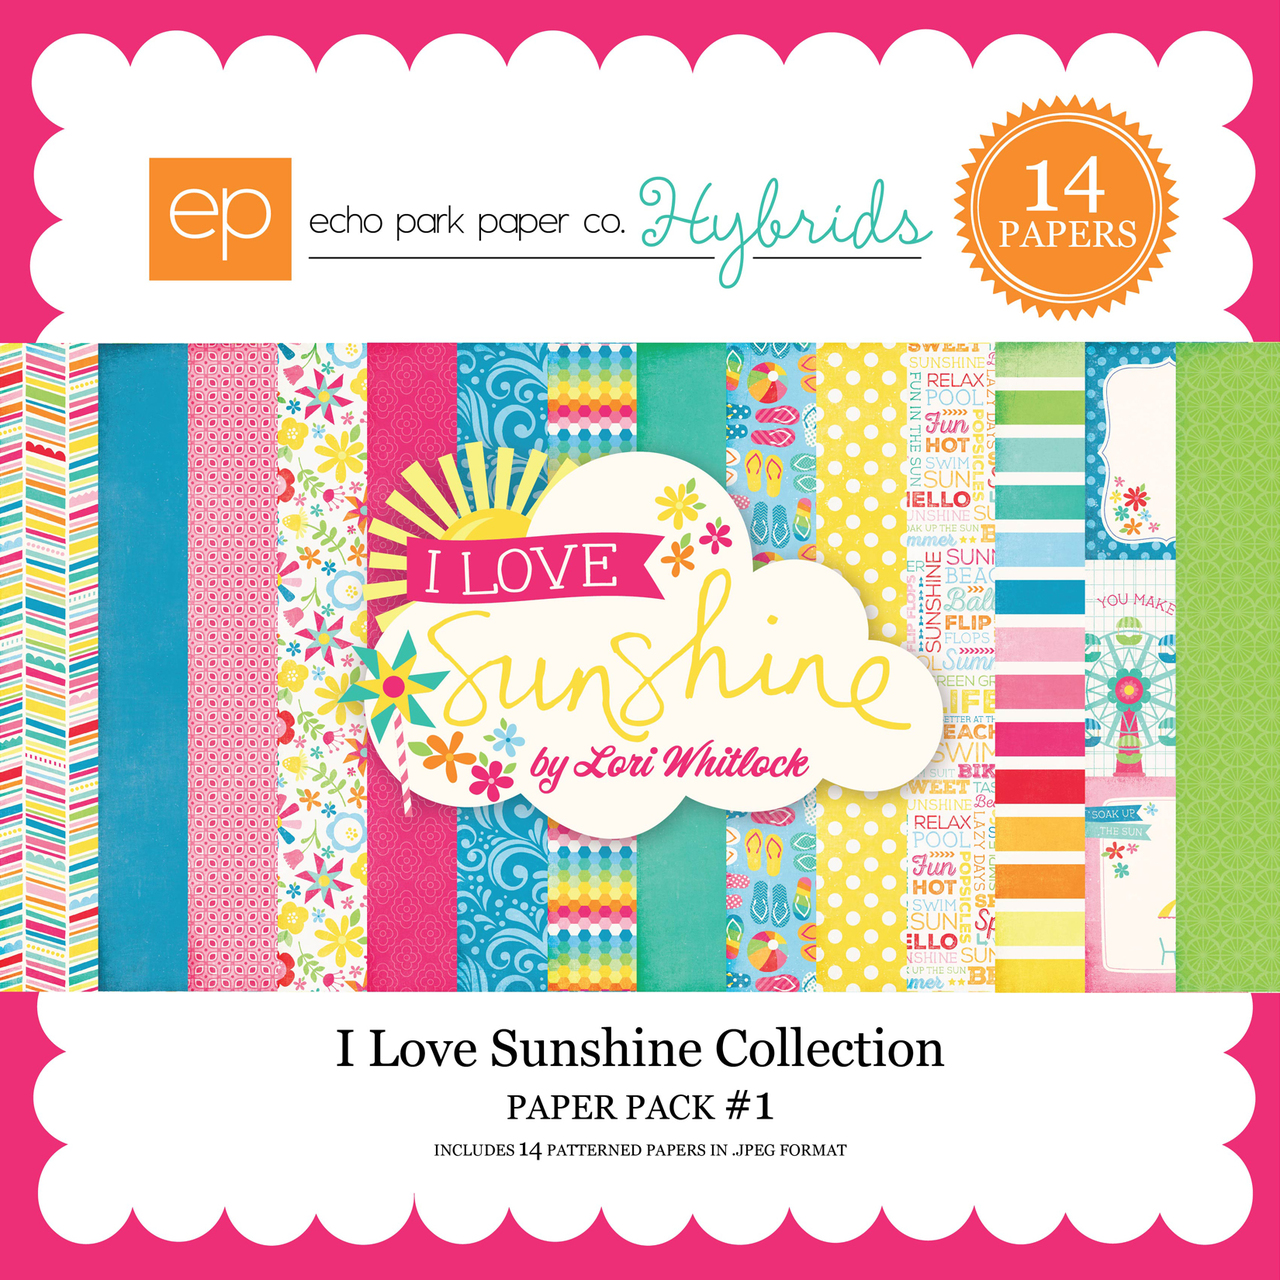 I Love Sunshine Paper Pack #1